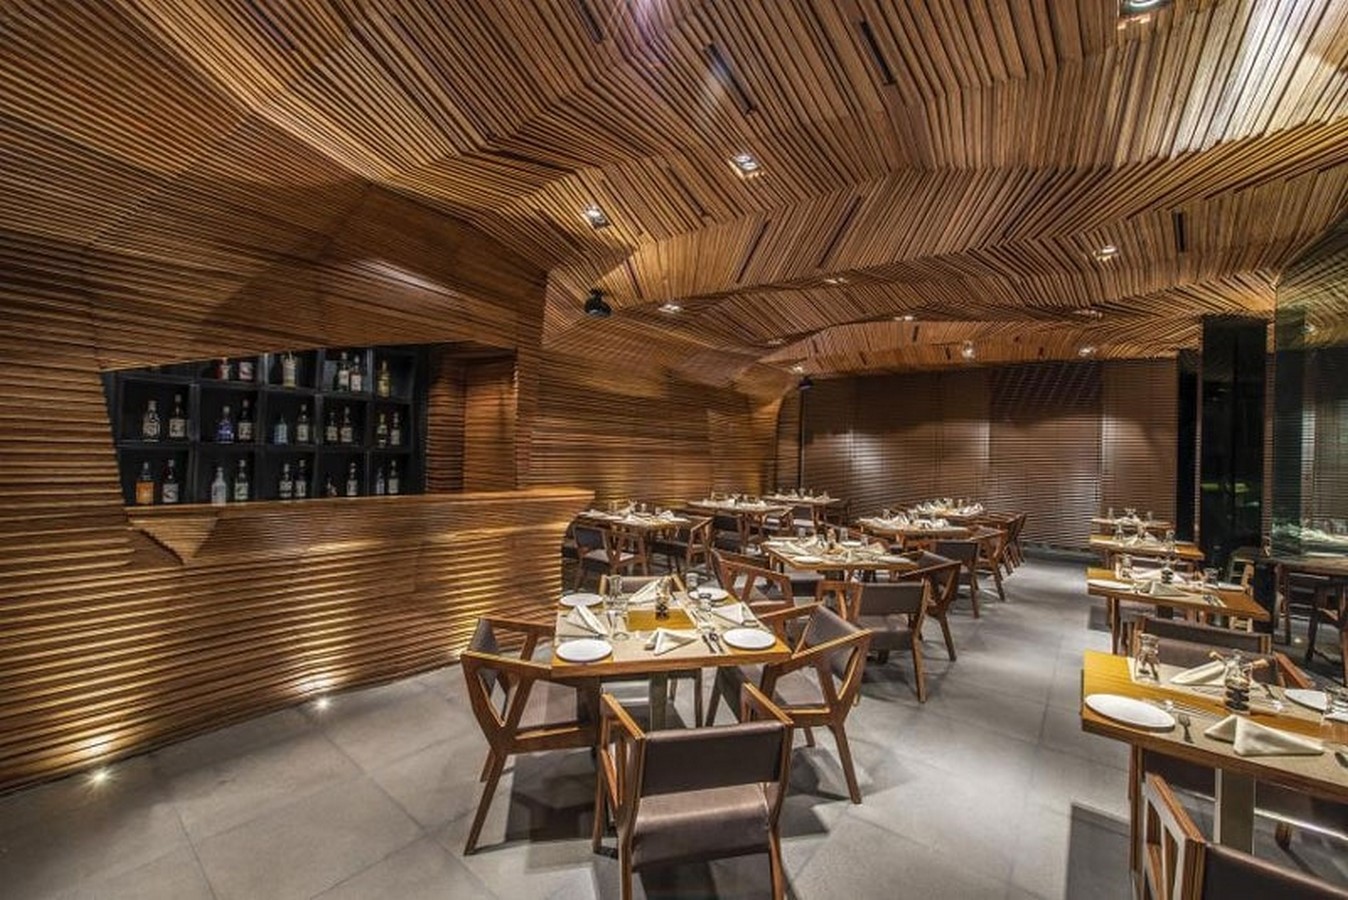 Auriga Restaurant by Sanjay Puri Architects: Revamping Factory Warehouse - Sheet10